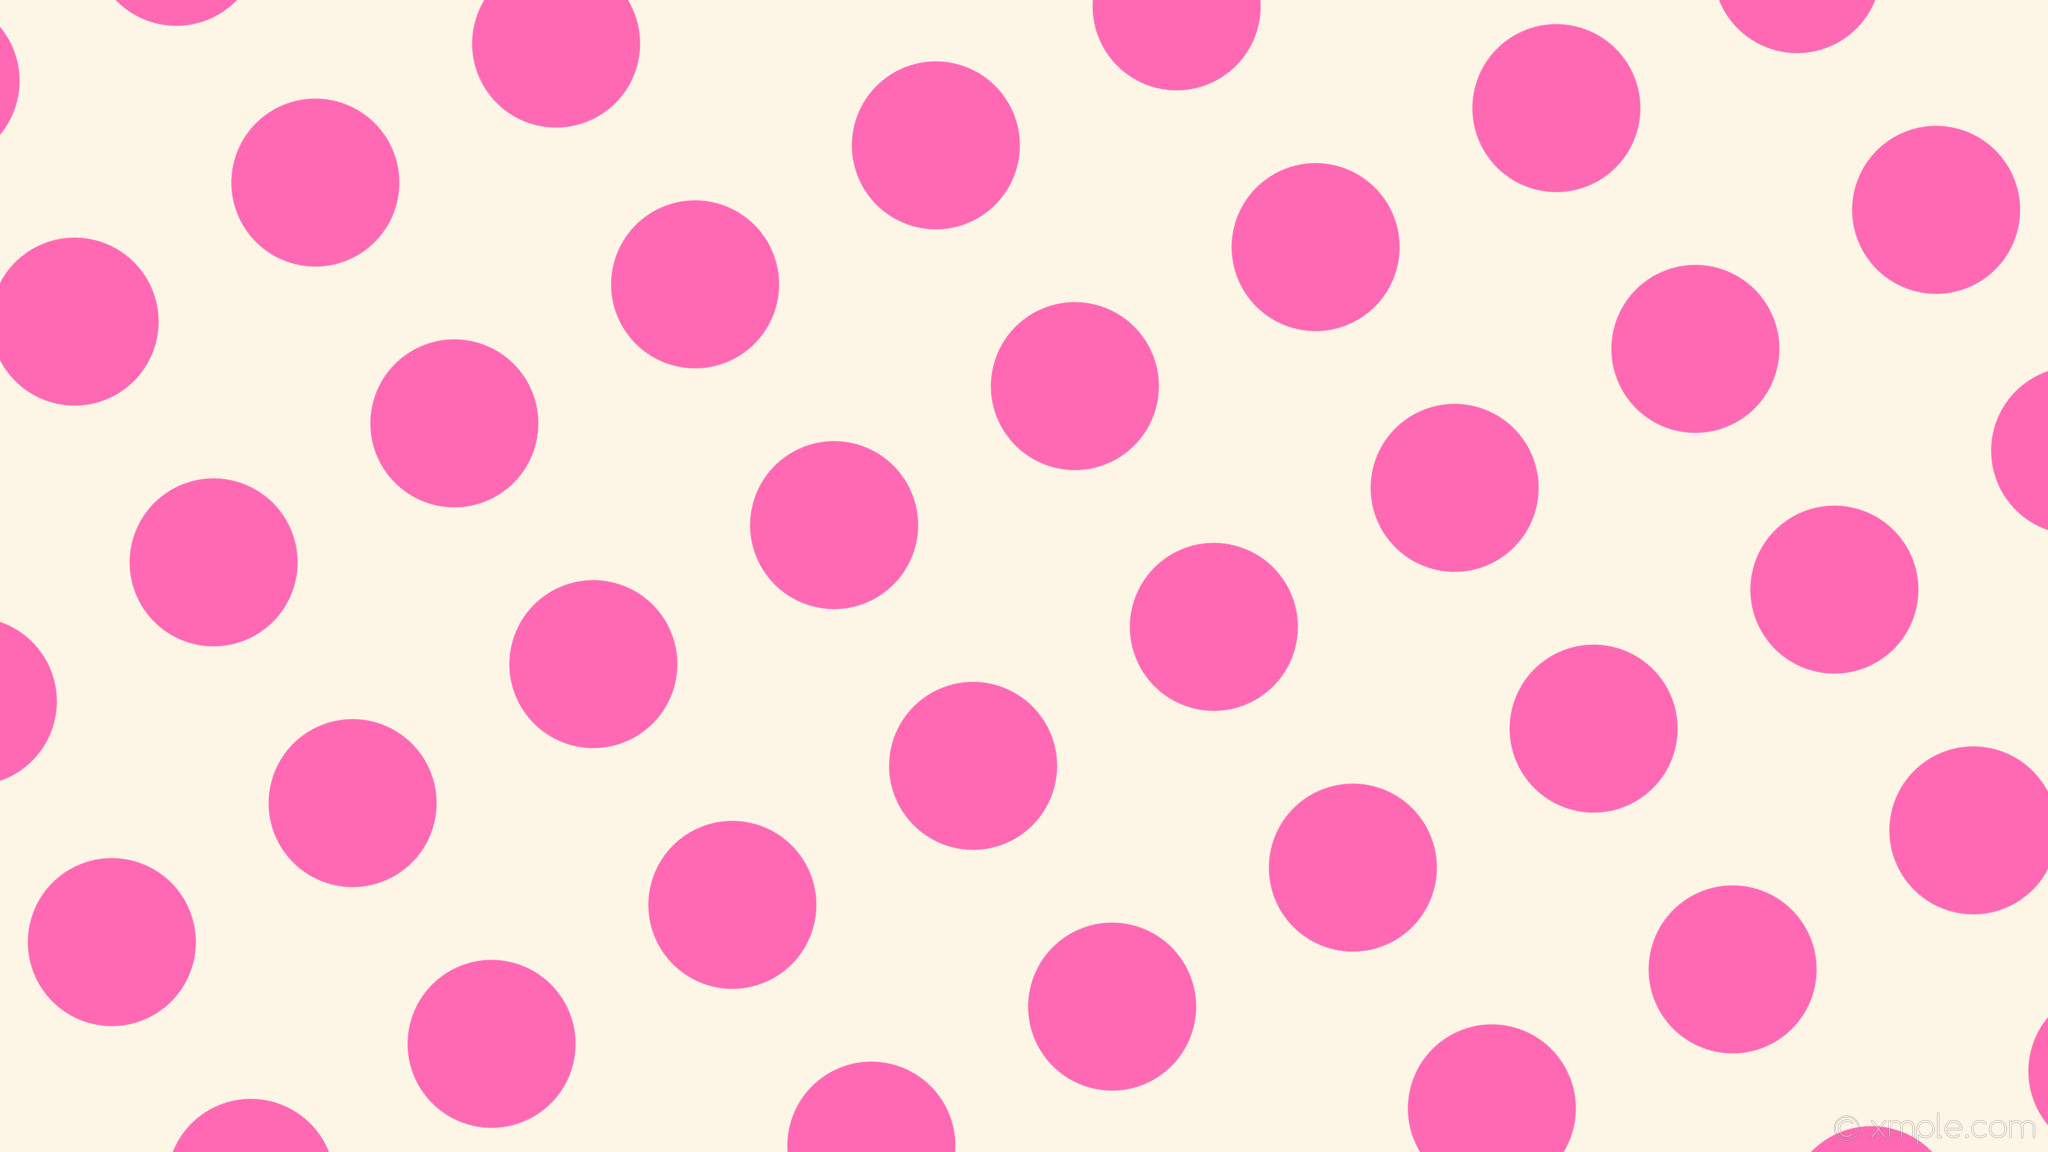 2048x1152 wallpaper white polka spots pink dots old lace hot pink #fdf5e6 #ff69b4 30Â°